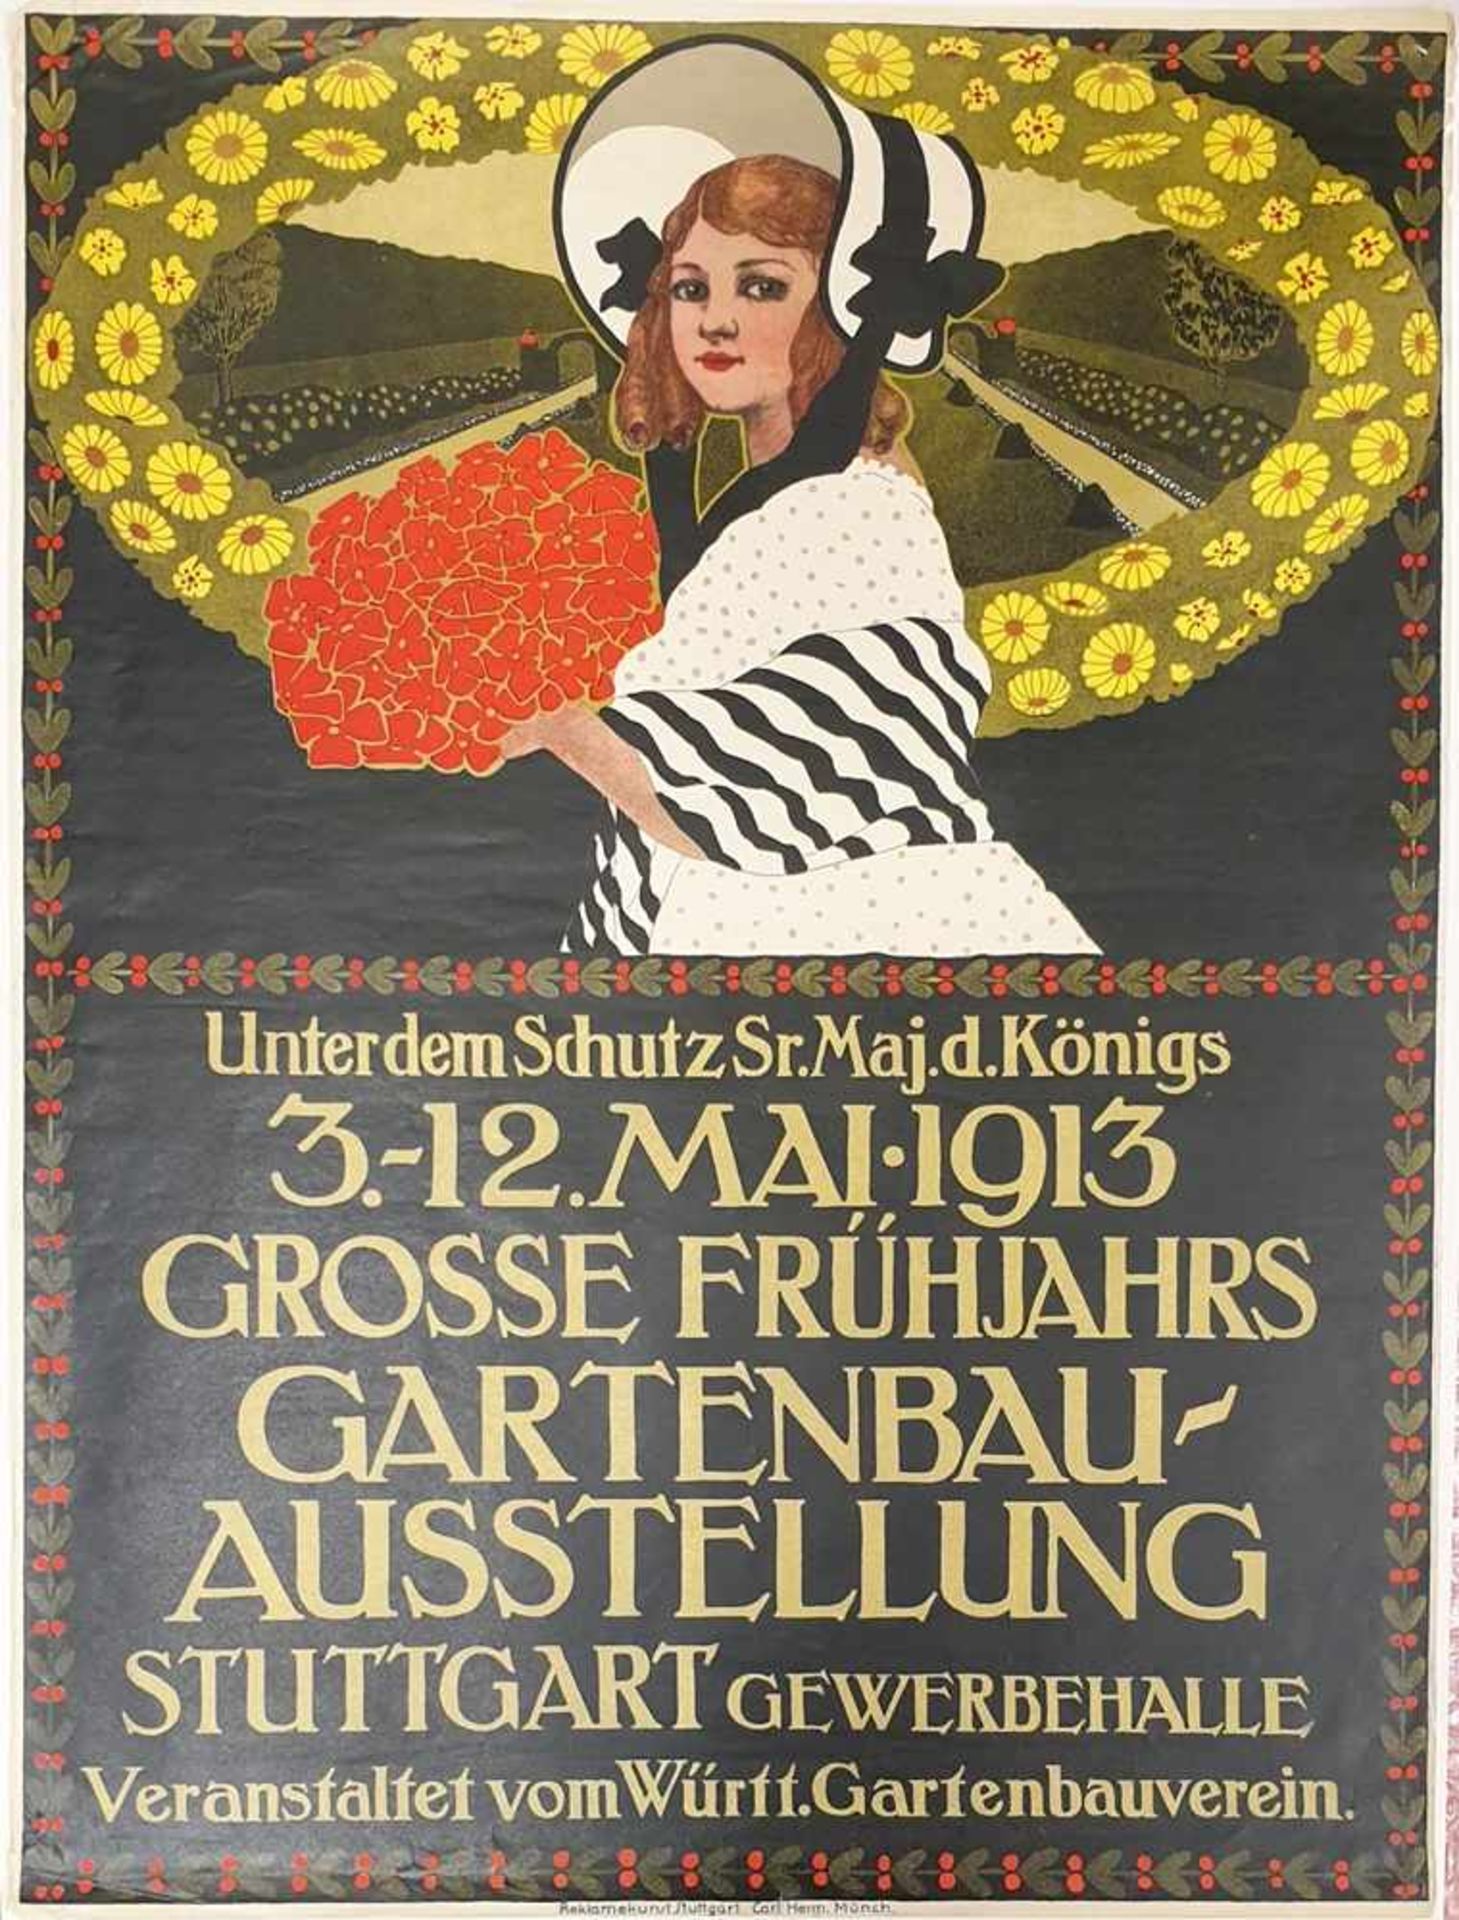 Altes Ausstellungsplakat, Grosse Frühjahrs Gartenbau Ausstellung Stuttgart, 1913, Größe: ca. 80x60cm